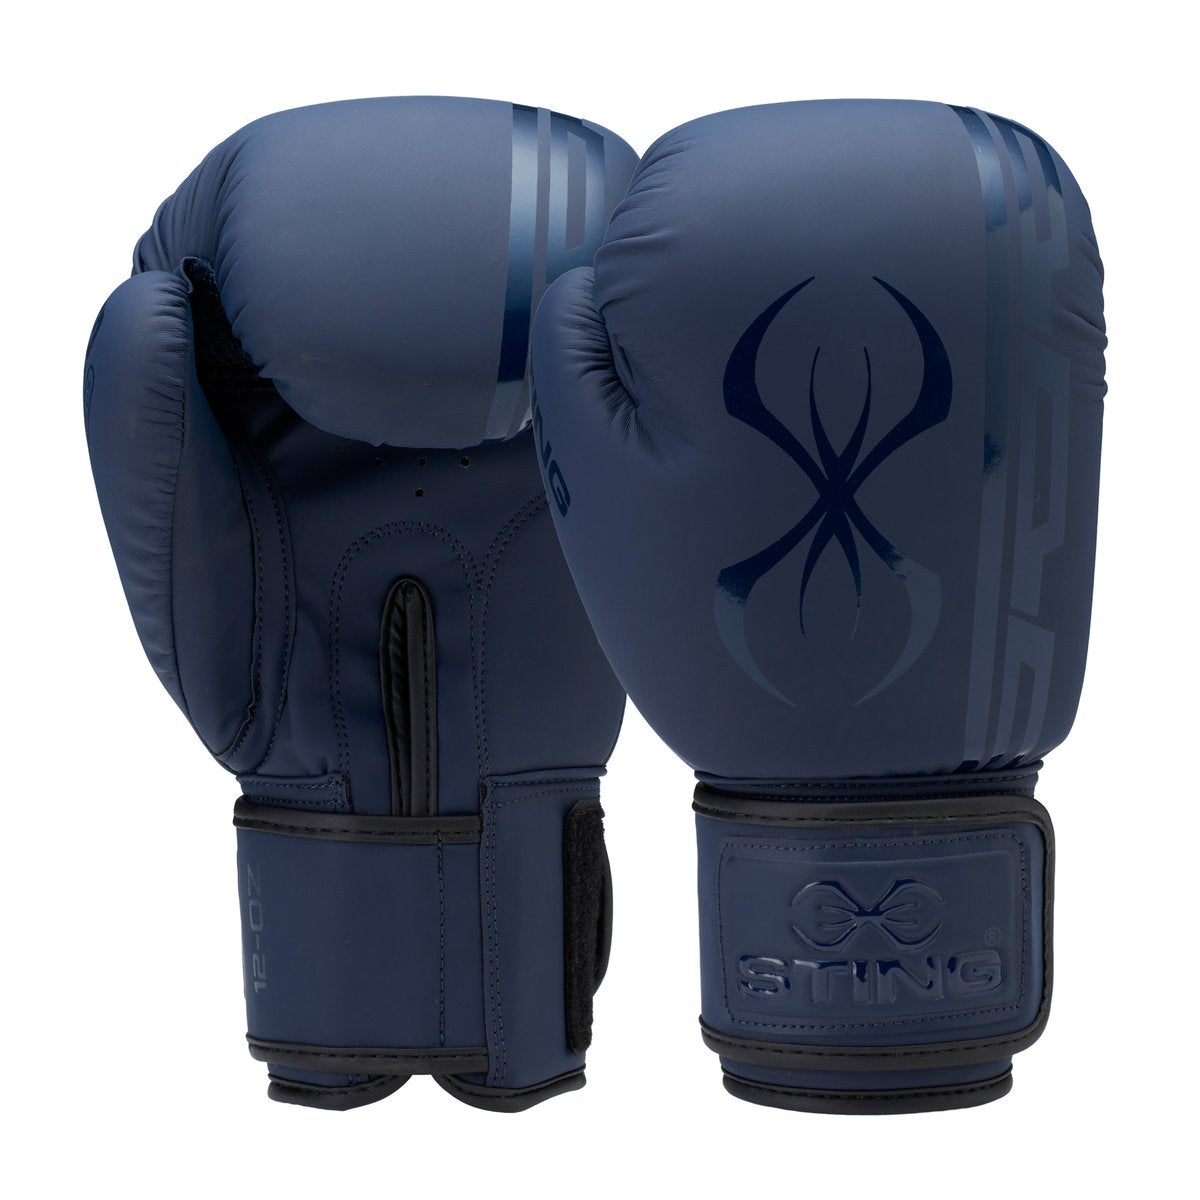 Sting Armaplus Boxing Glove